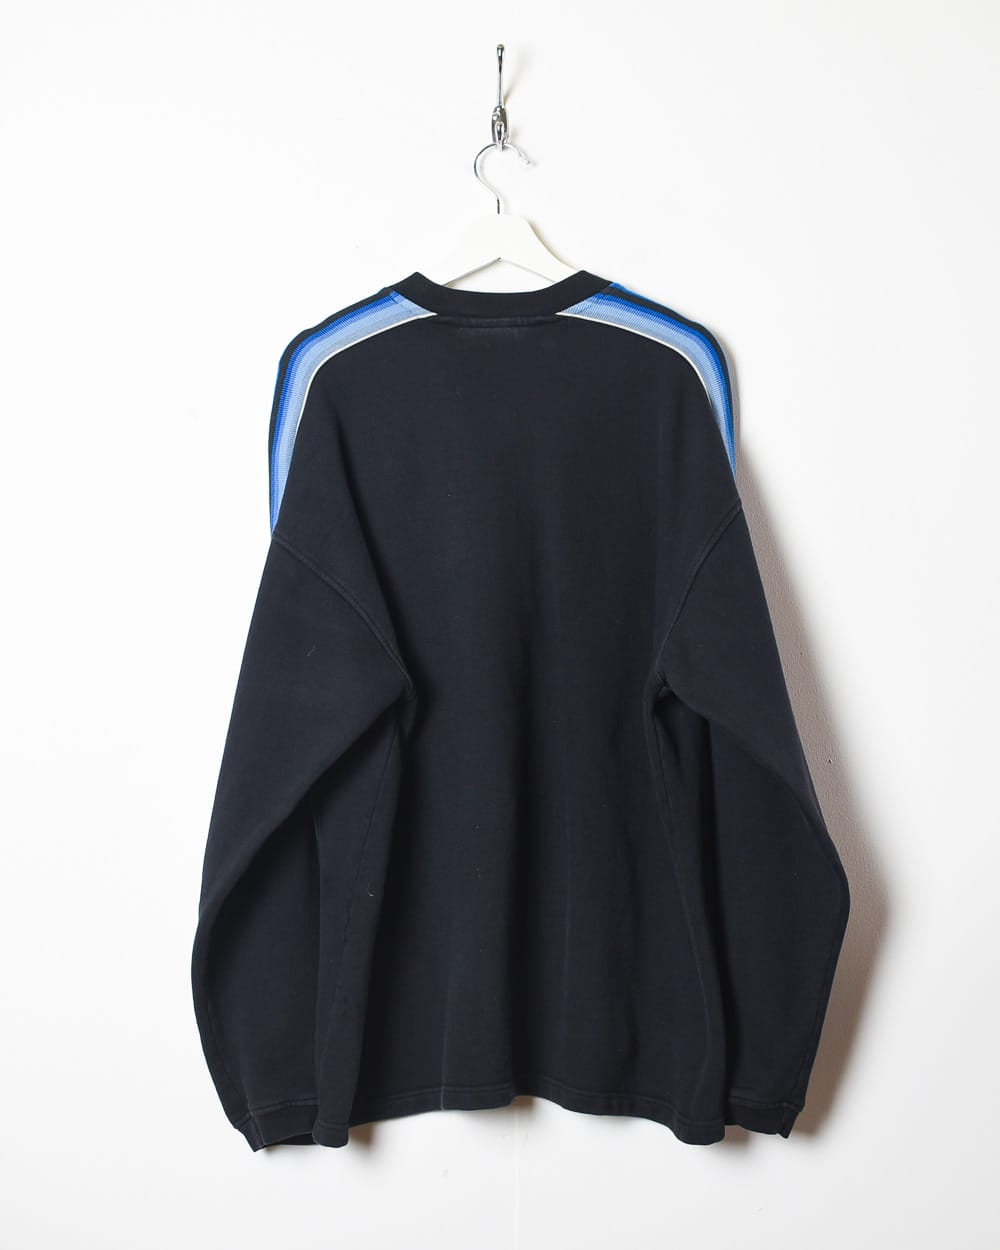 Black Quiksilver Sweatshirt - XX-Large